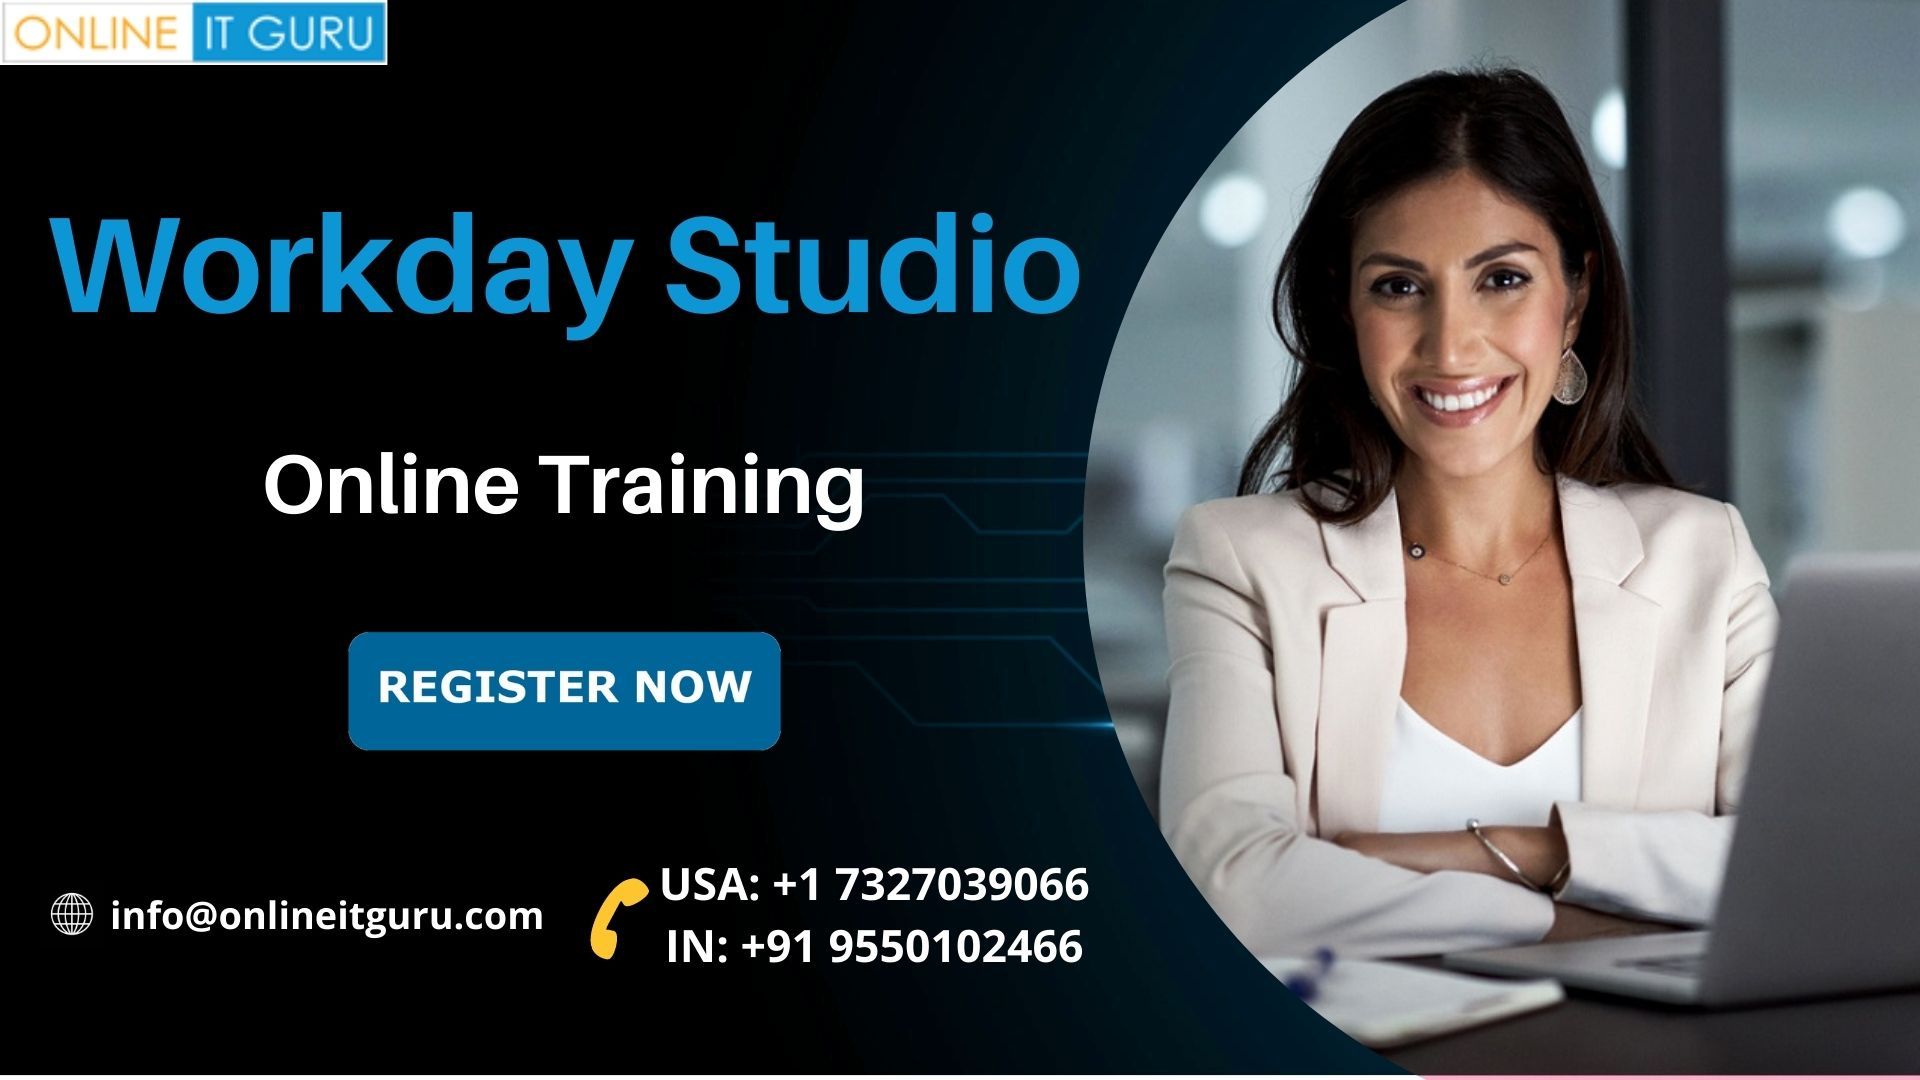 Workday studio online training | workday studio online training hyderabad